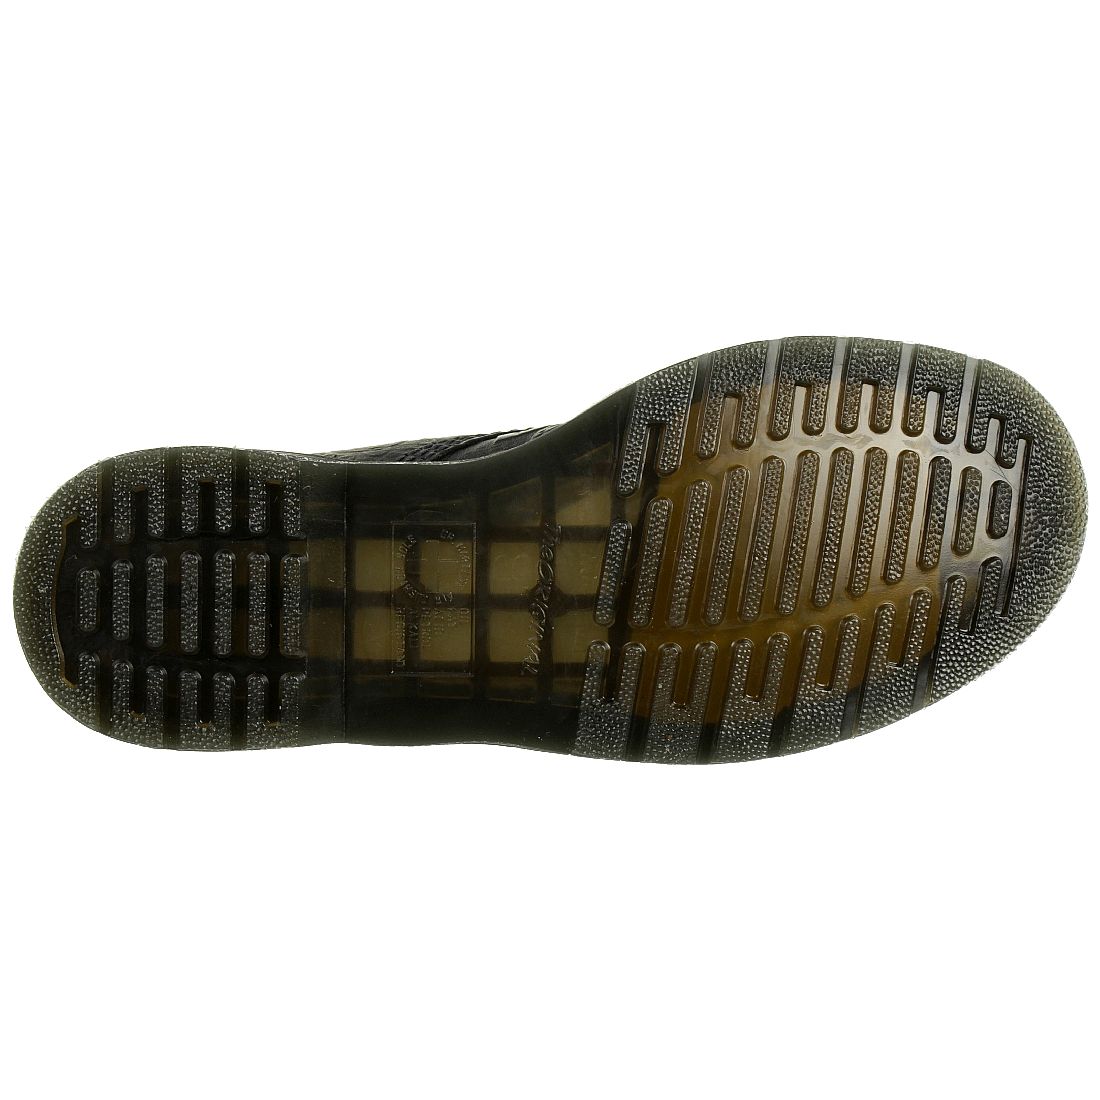 Dr. Martens PASCAL FLORAL Emboss Boots schwarz 